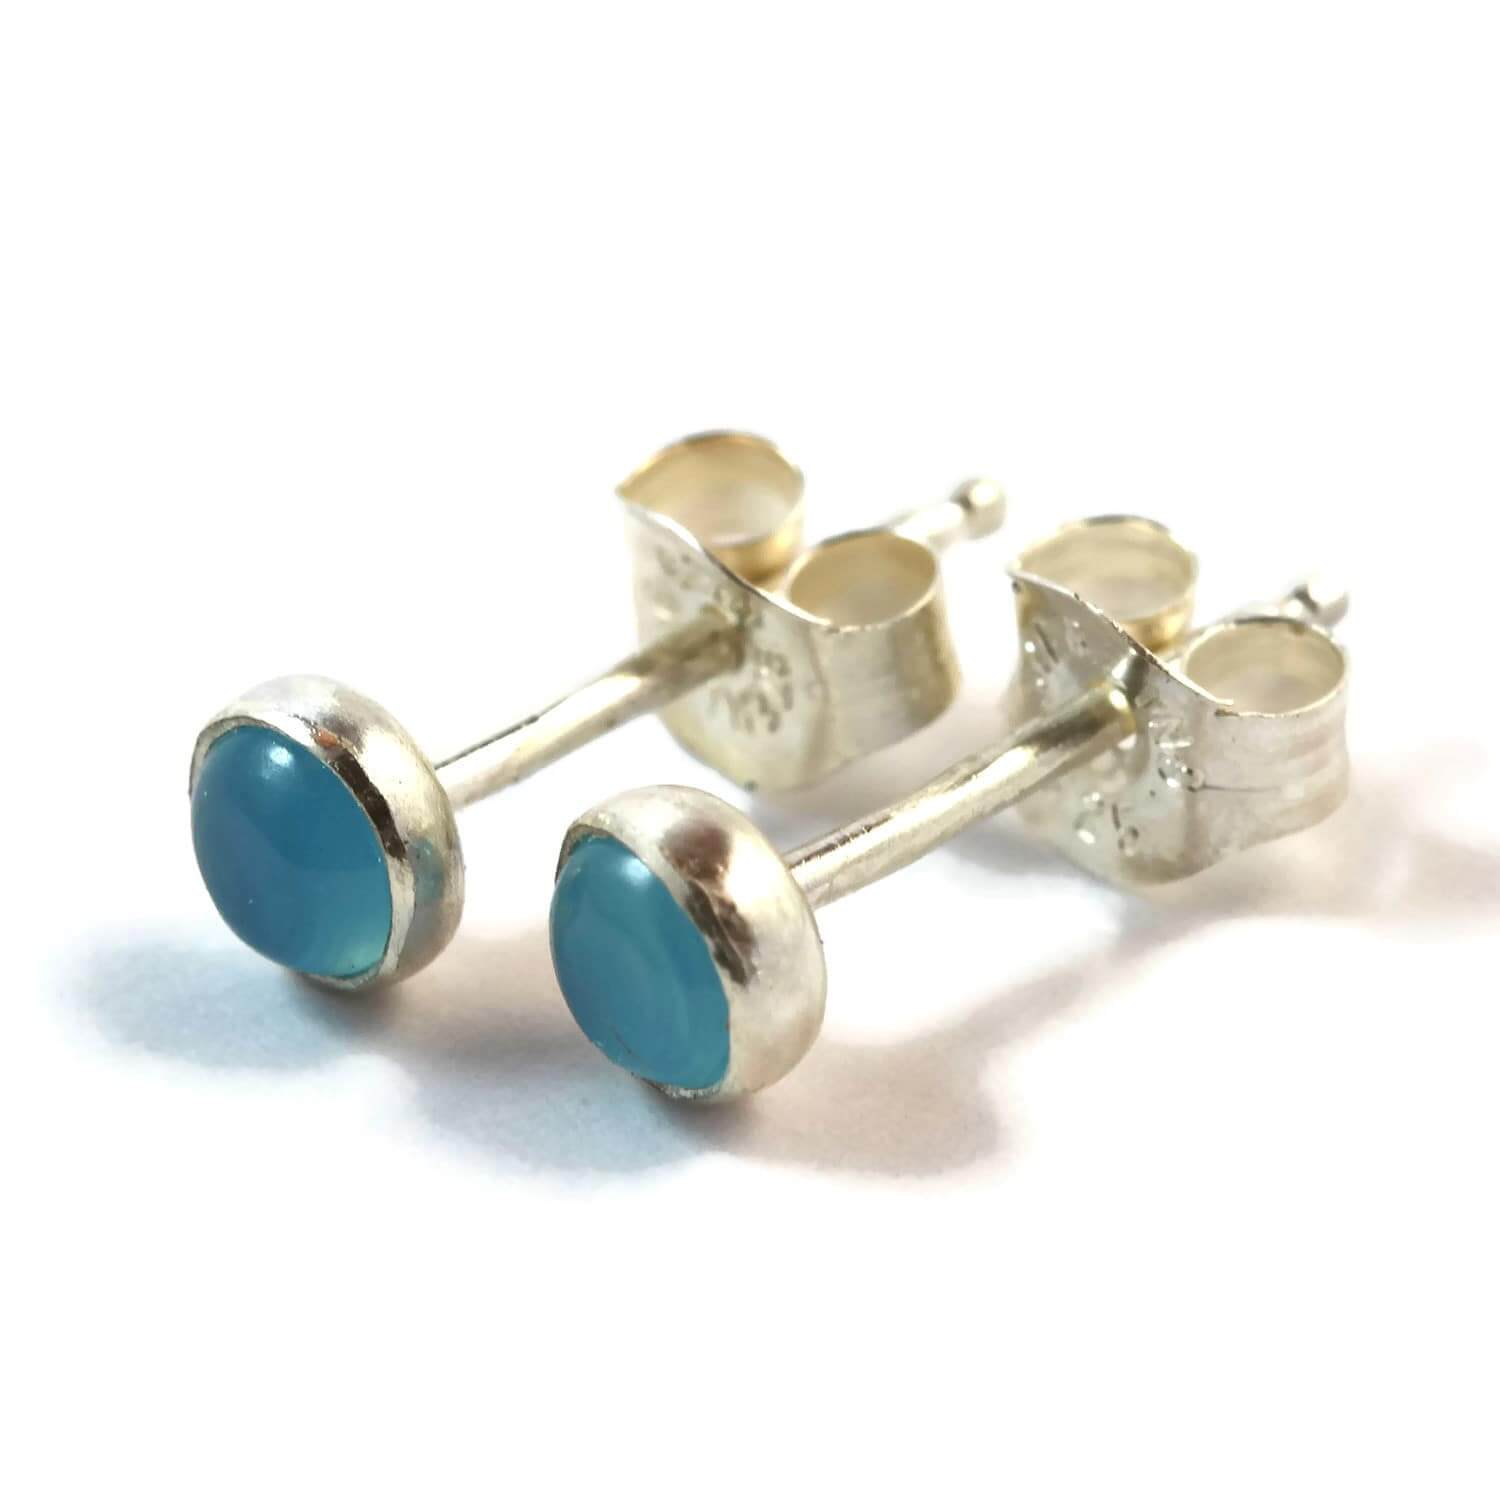 Blue Chalcedony Stud Earrings - Rebecca Cordingley